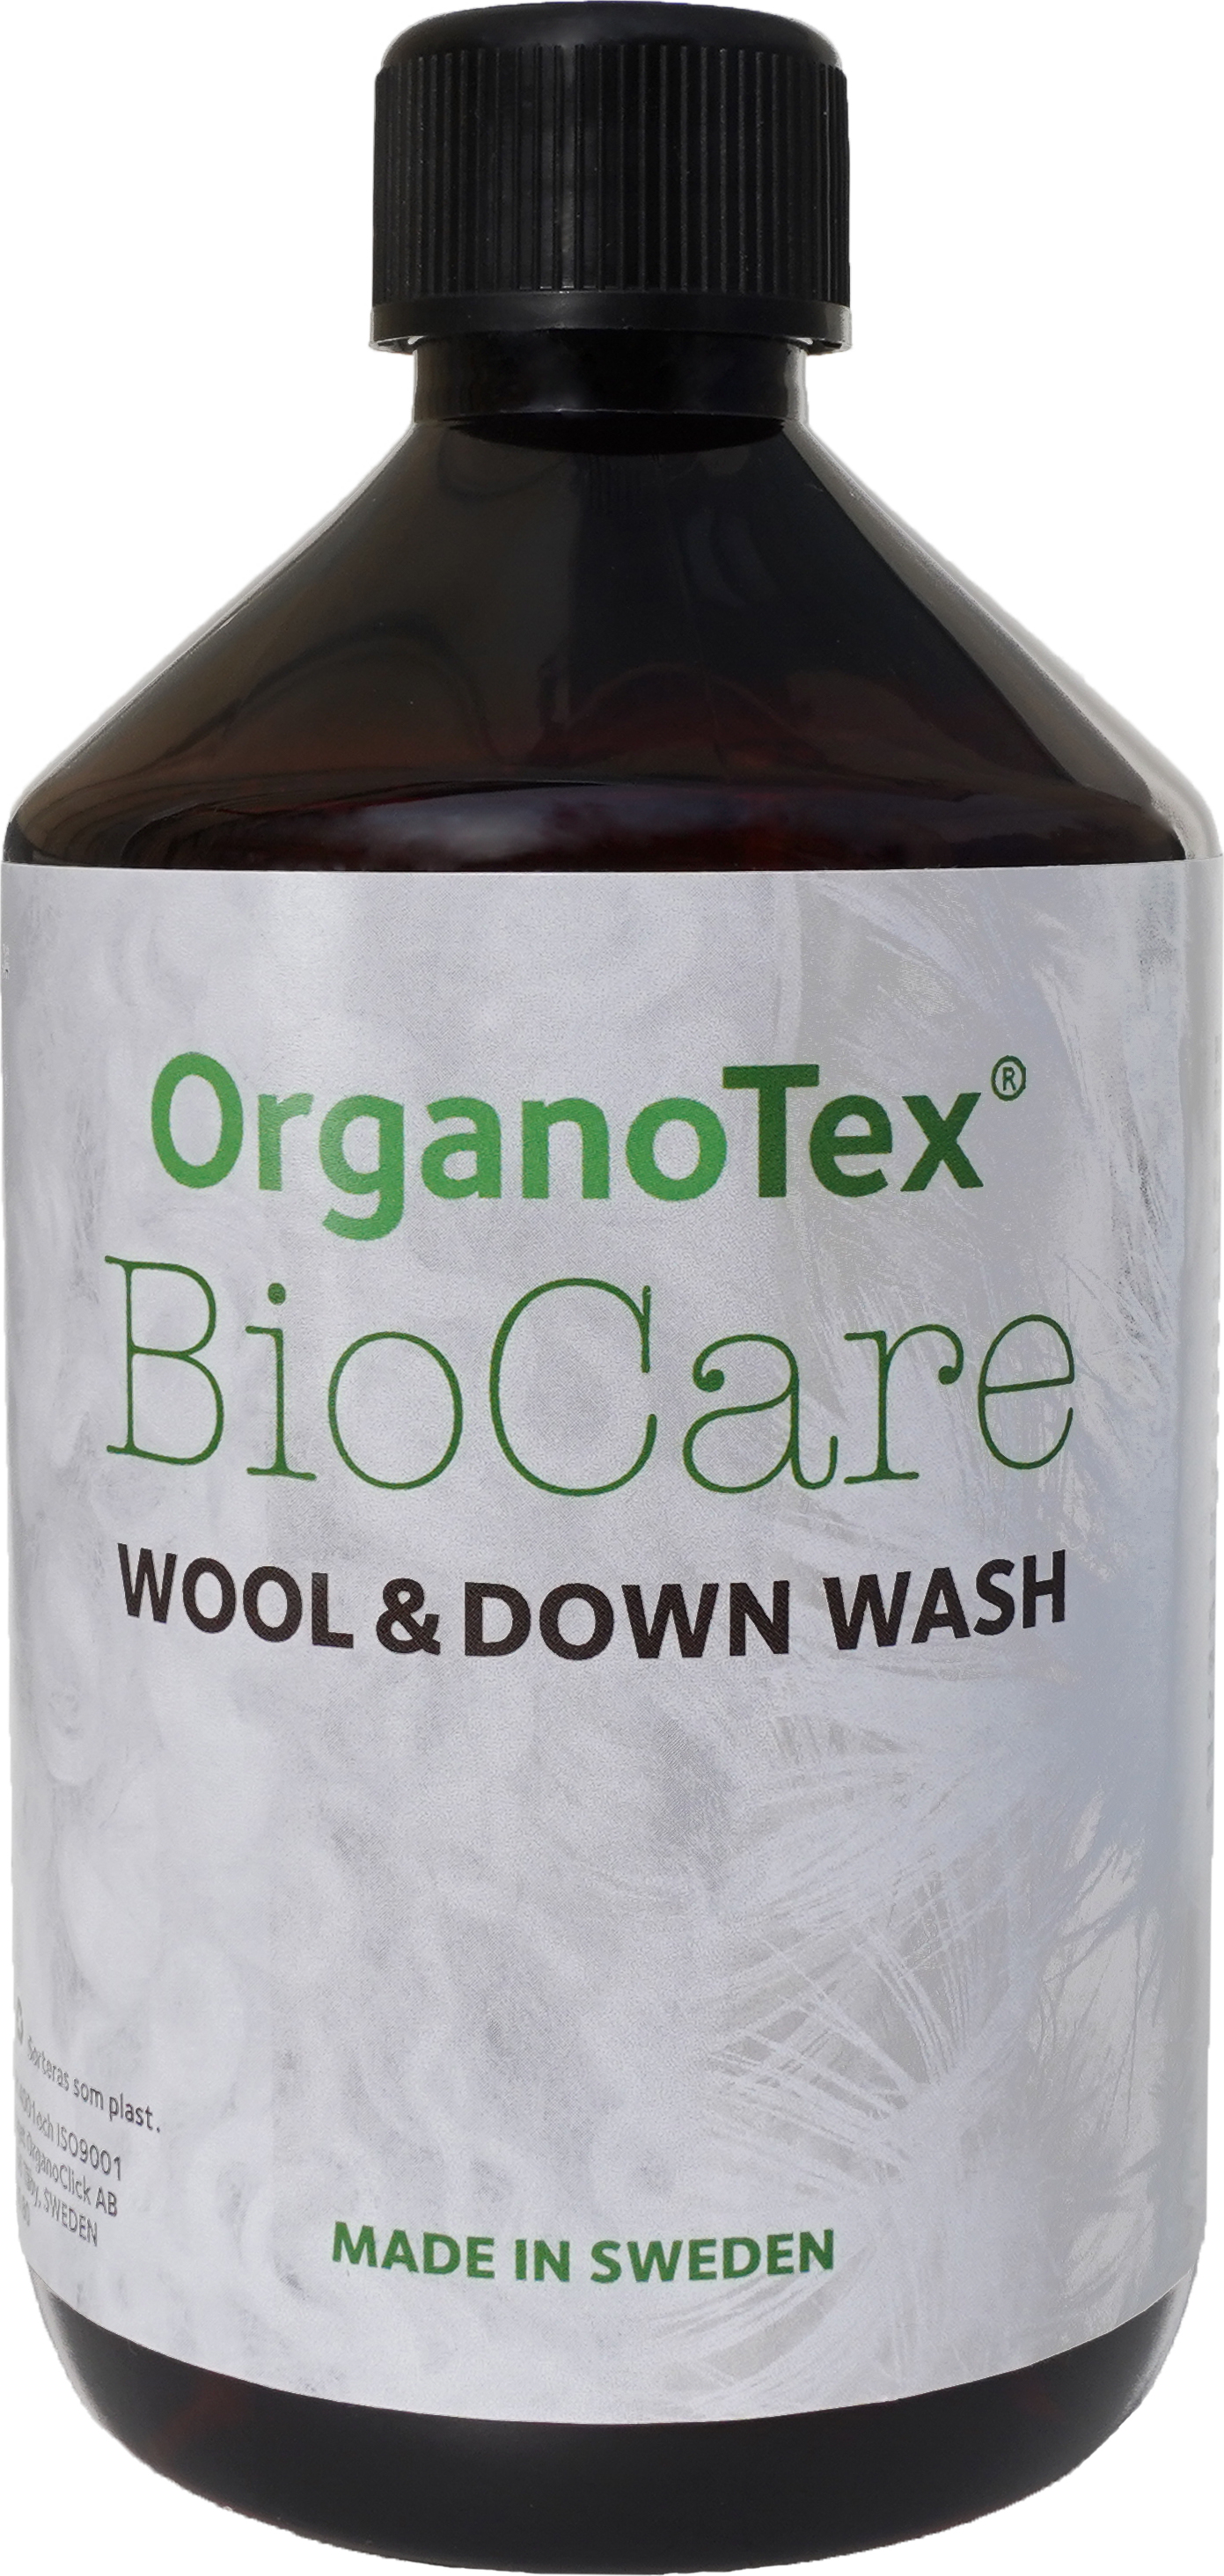 OrganoTex Biocare Wool & Down Wash 500 ml Nocolour